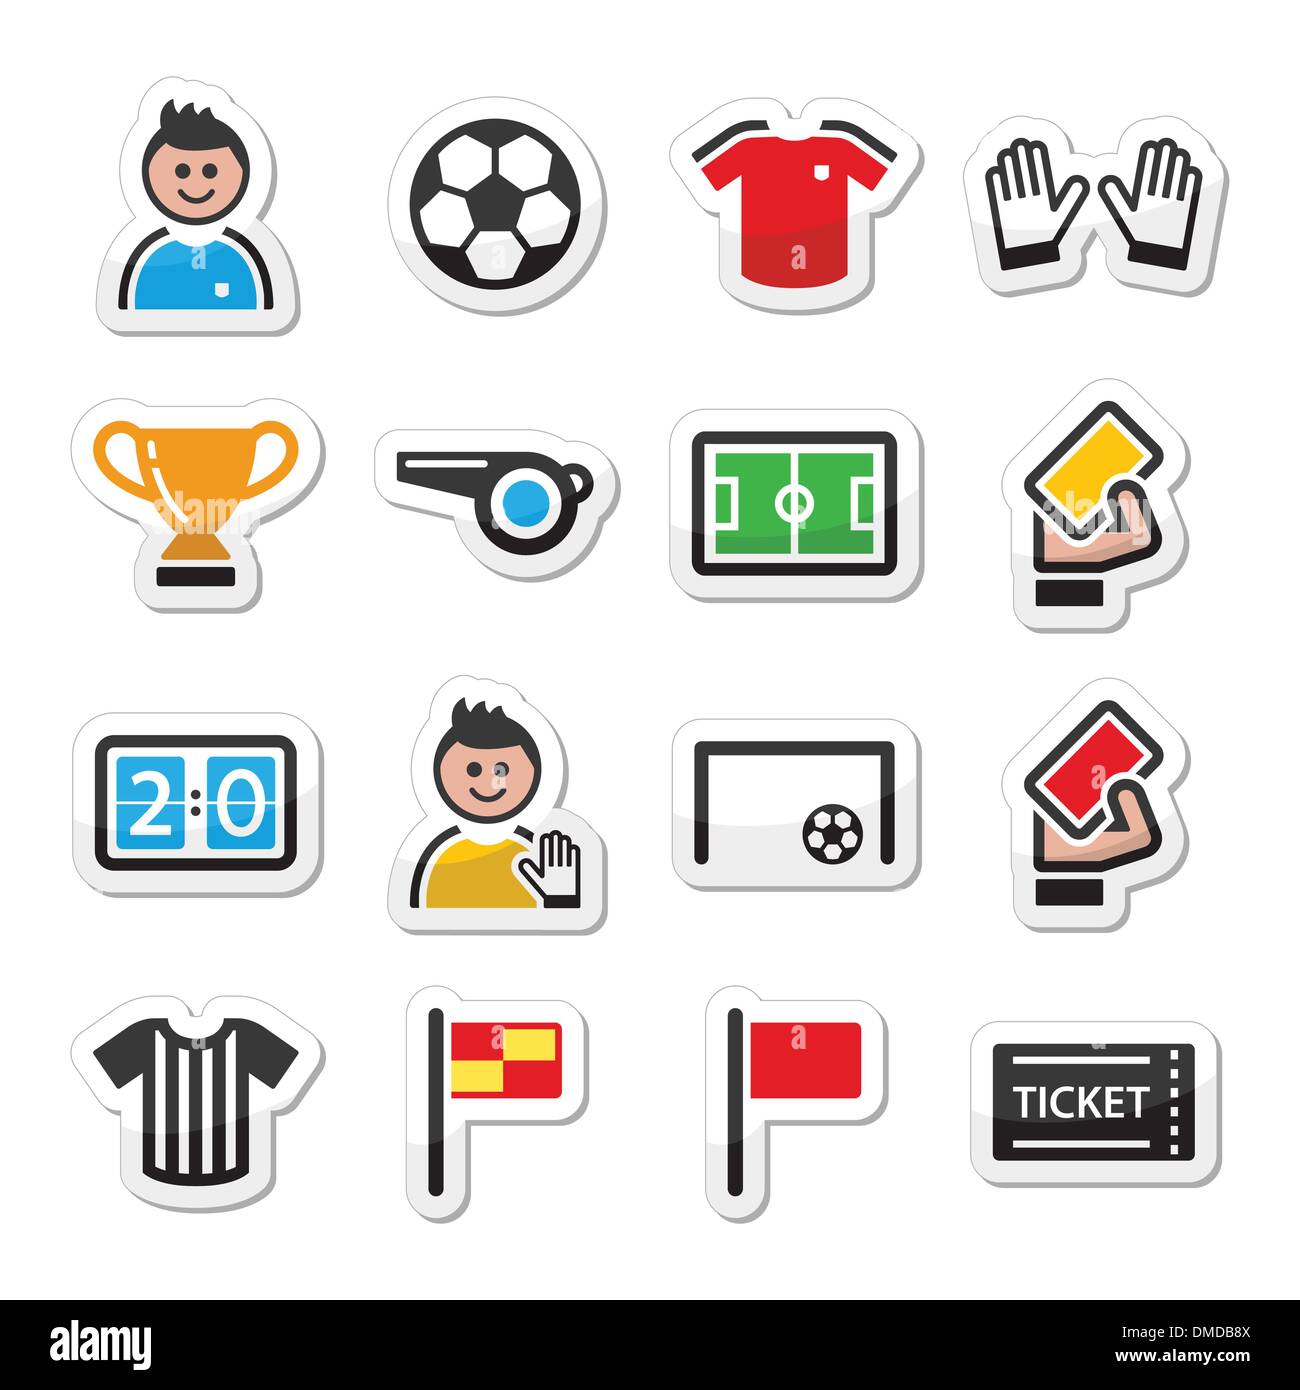 Football / Soccer vector icons set Illustration de Vecteur